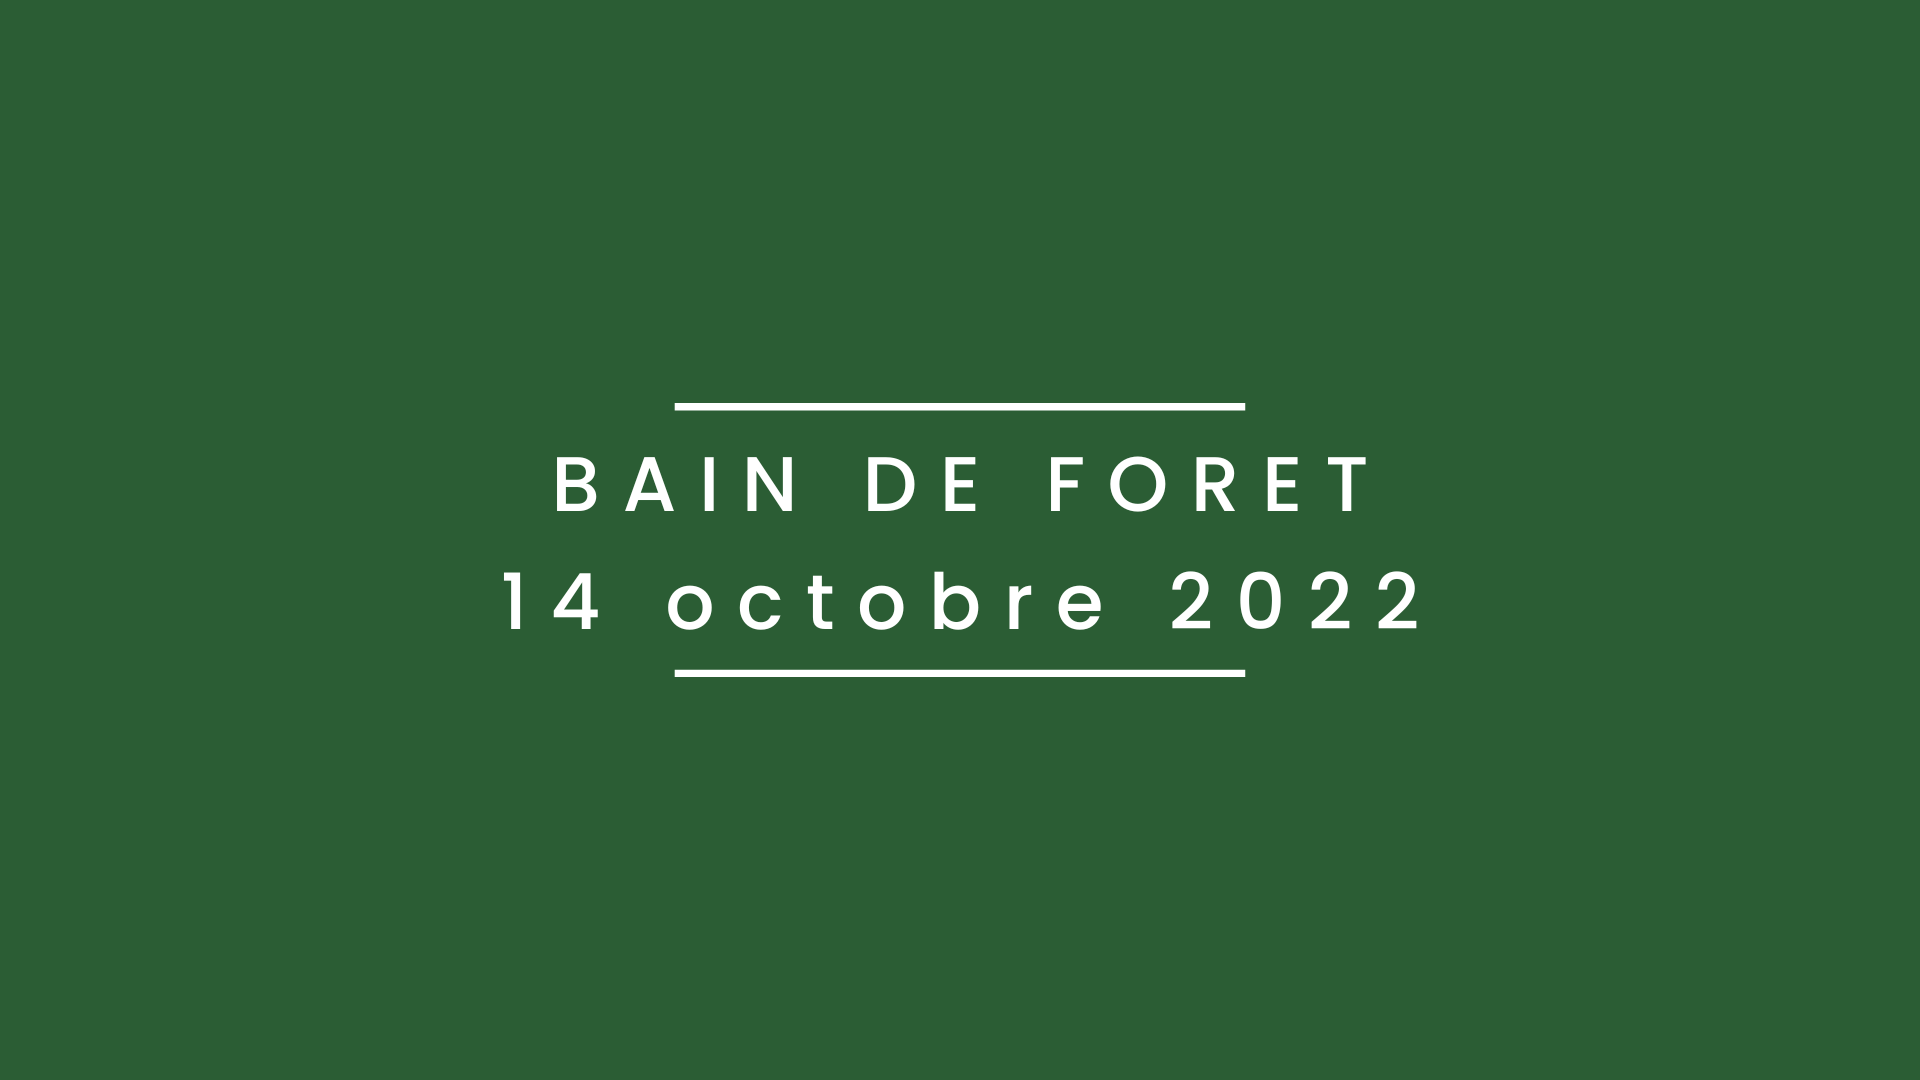 Bain de forêt du 14 octobre 2022